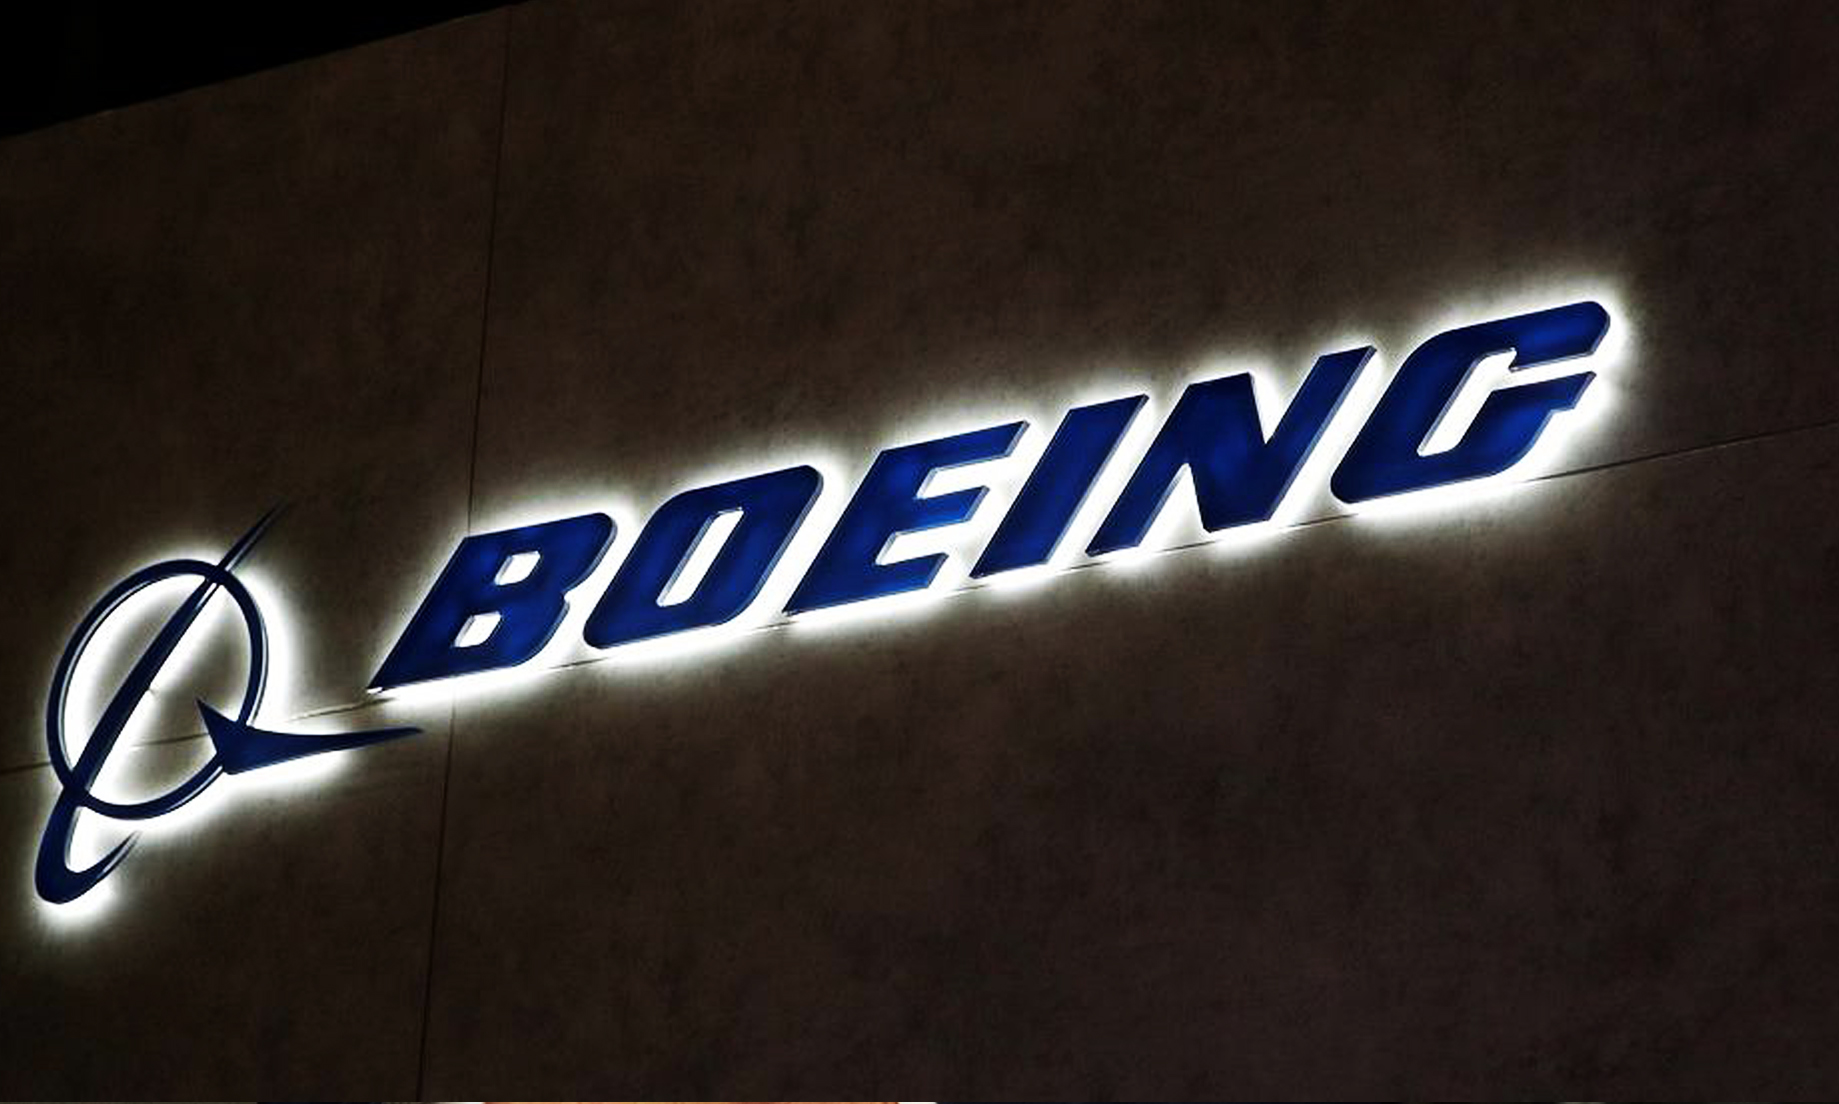 Boeing pledges $100m to families of 737 MAX crash victims